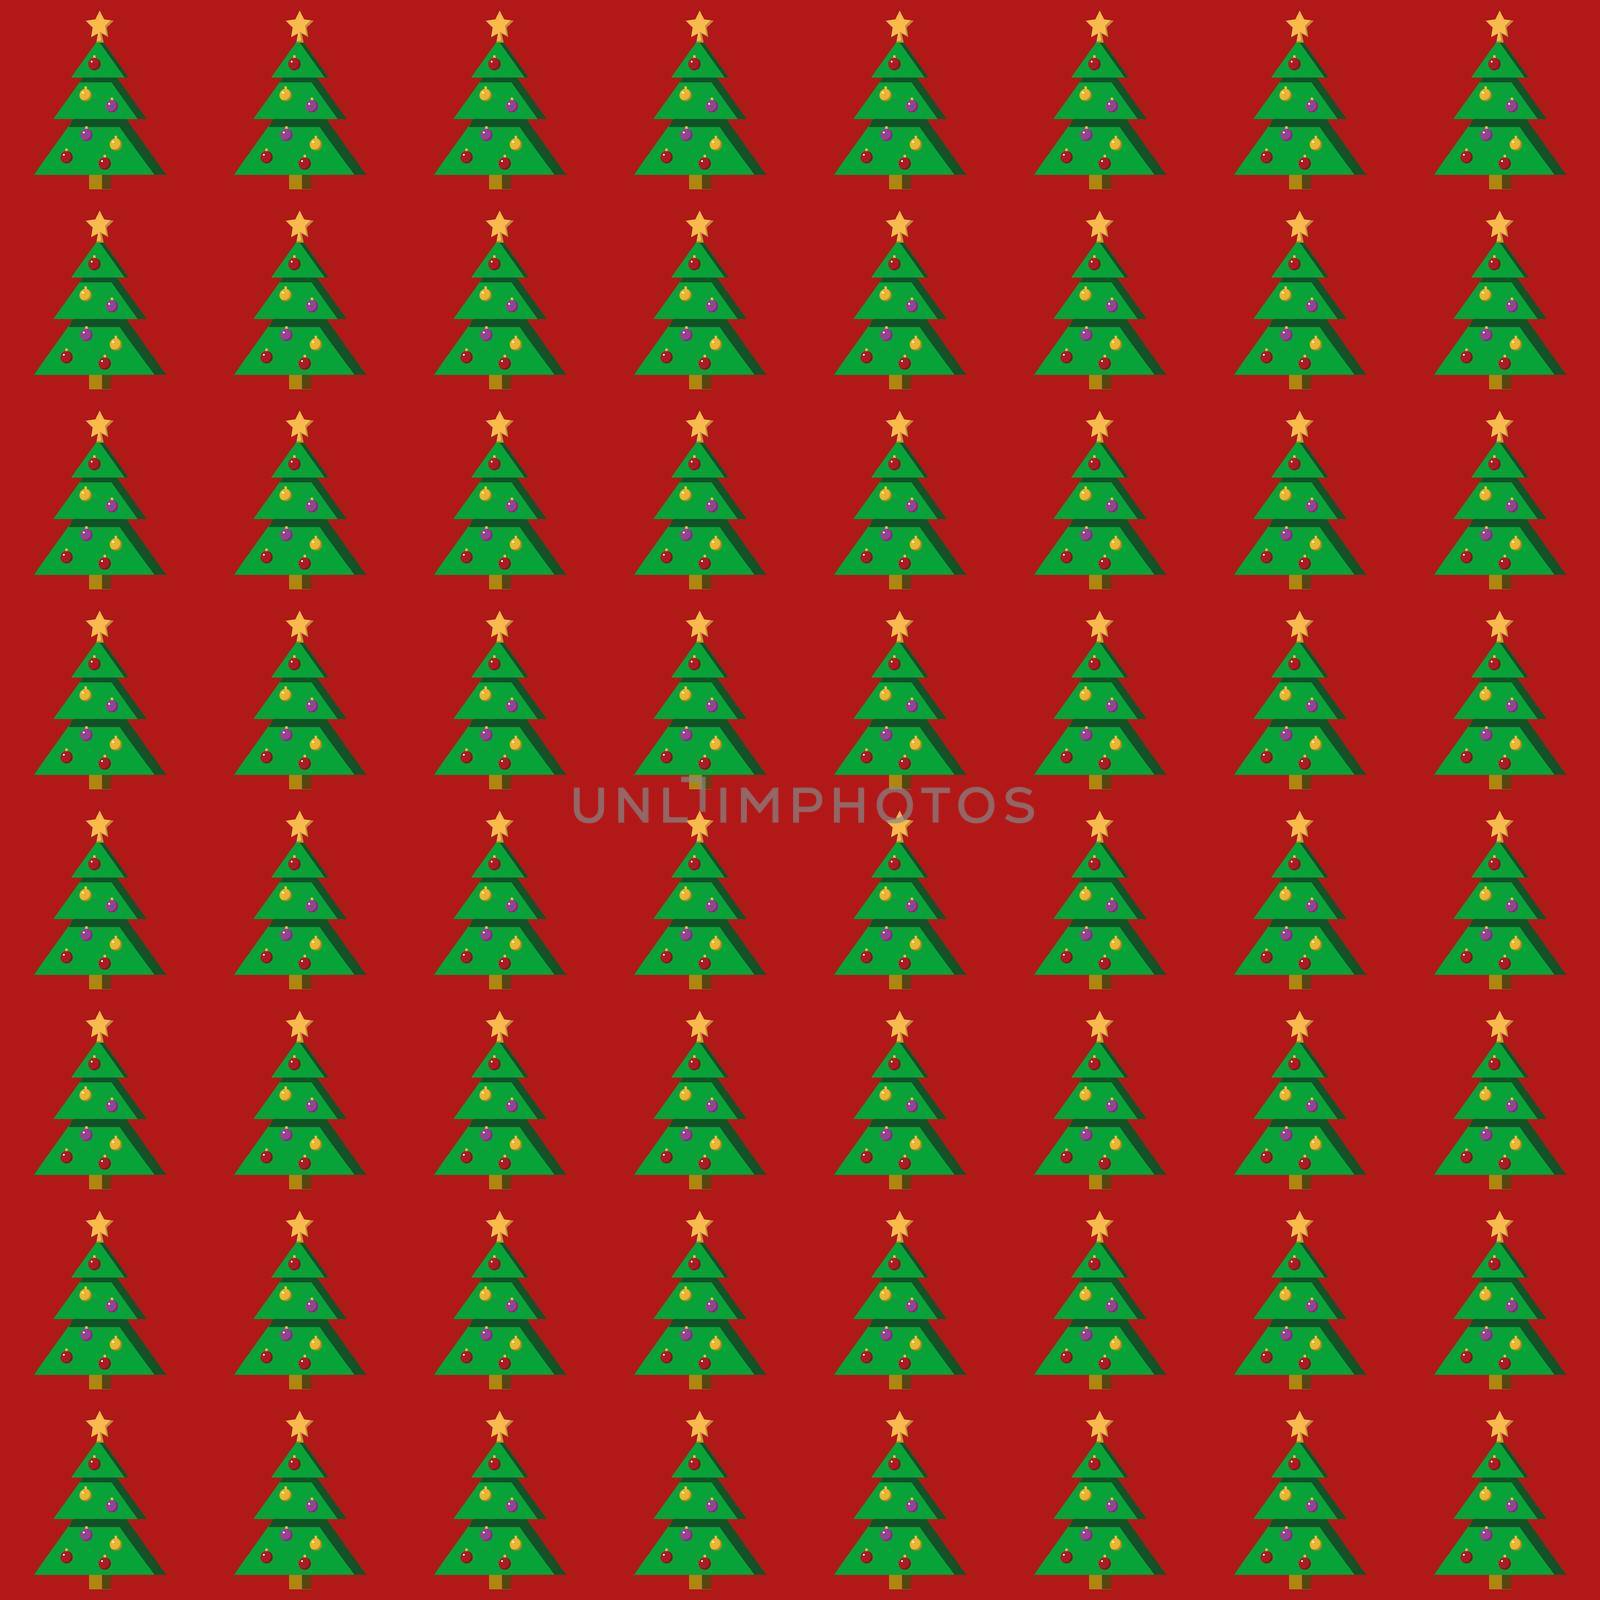 Flat Christmas tree seamless pattern on red background. illustration